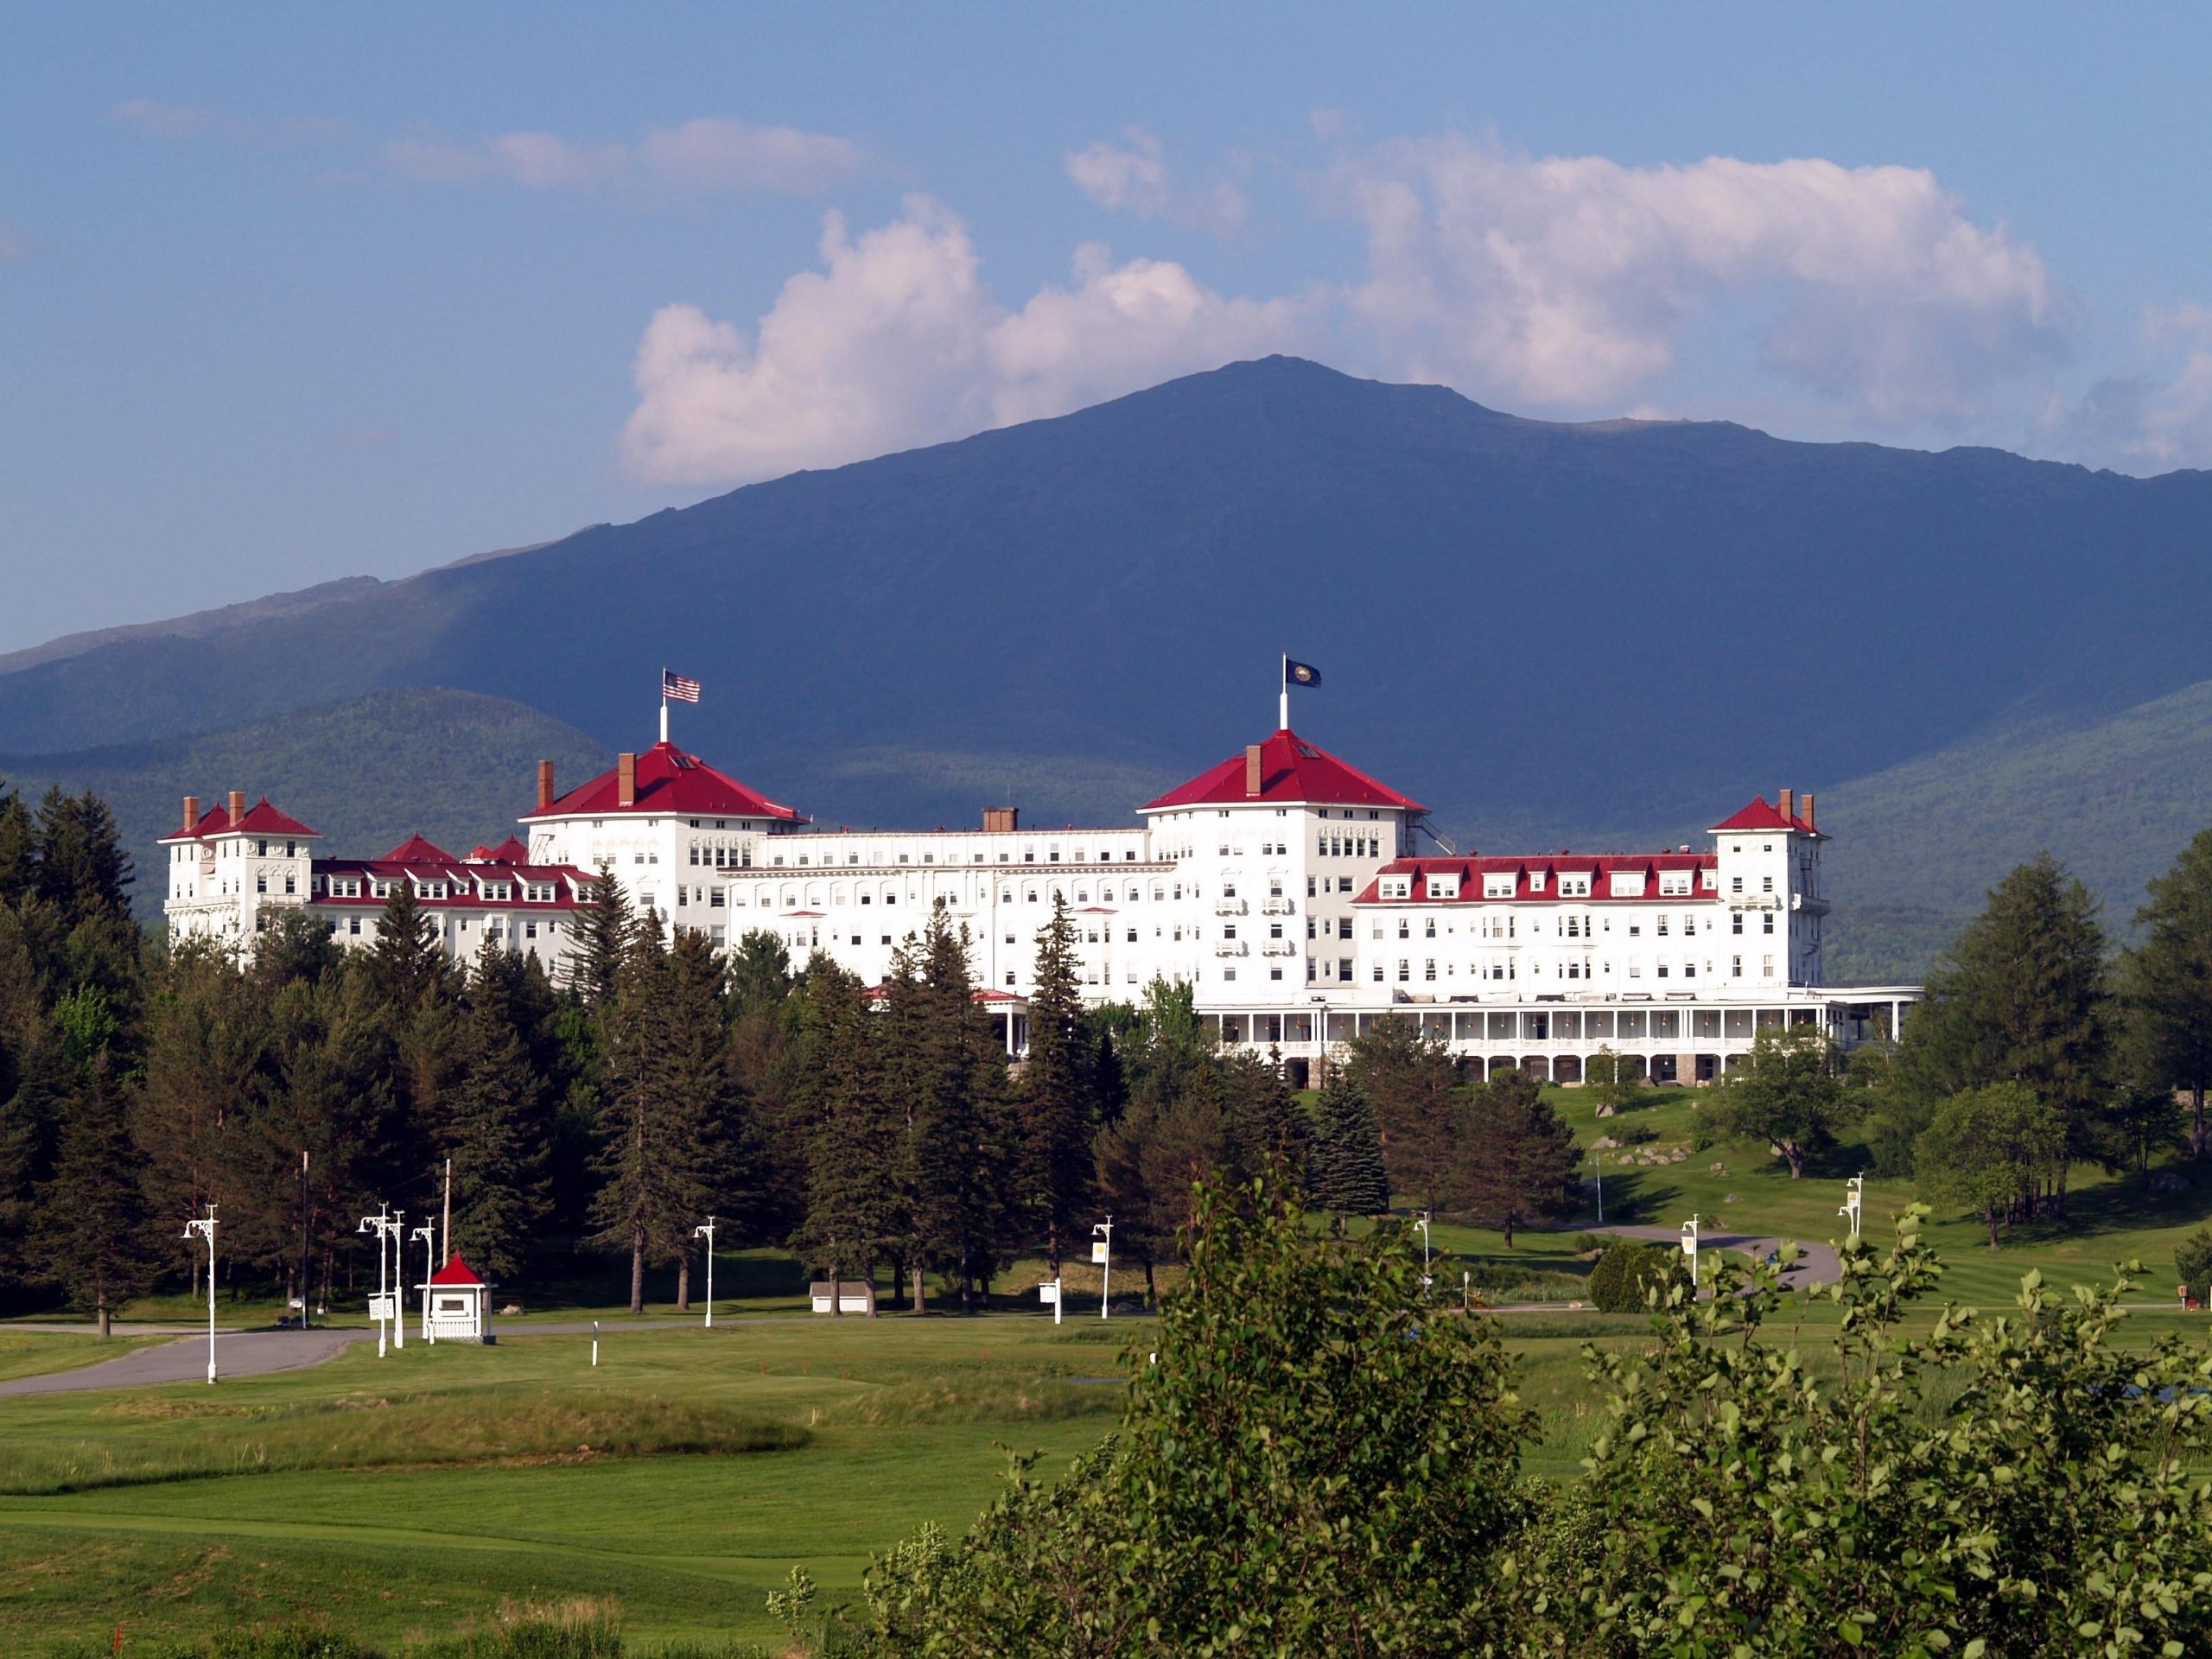 Mount Washington Hotel (user submitted)